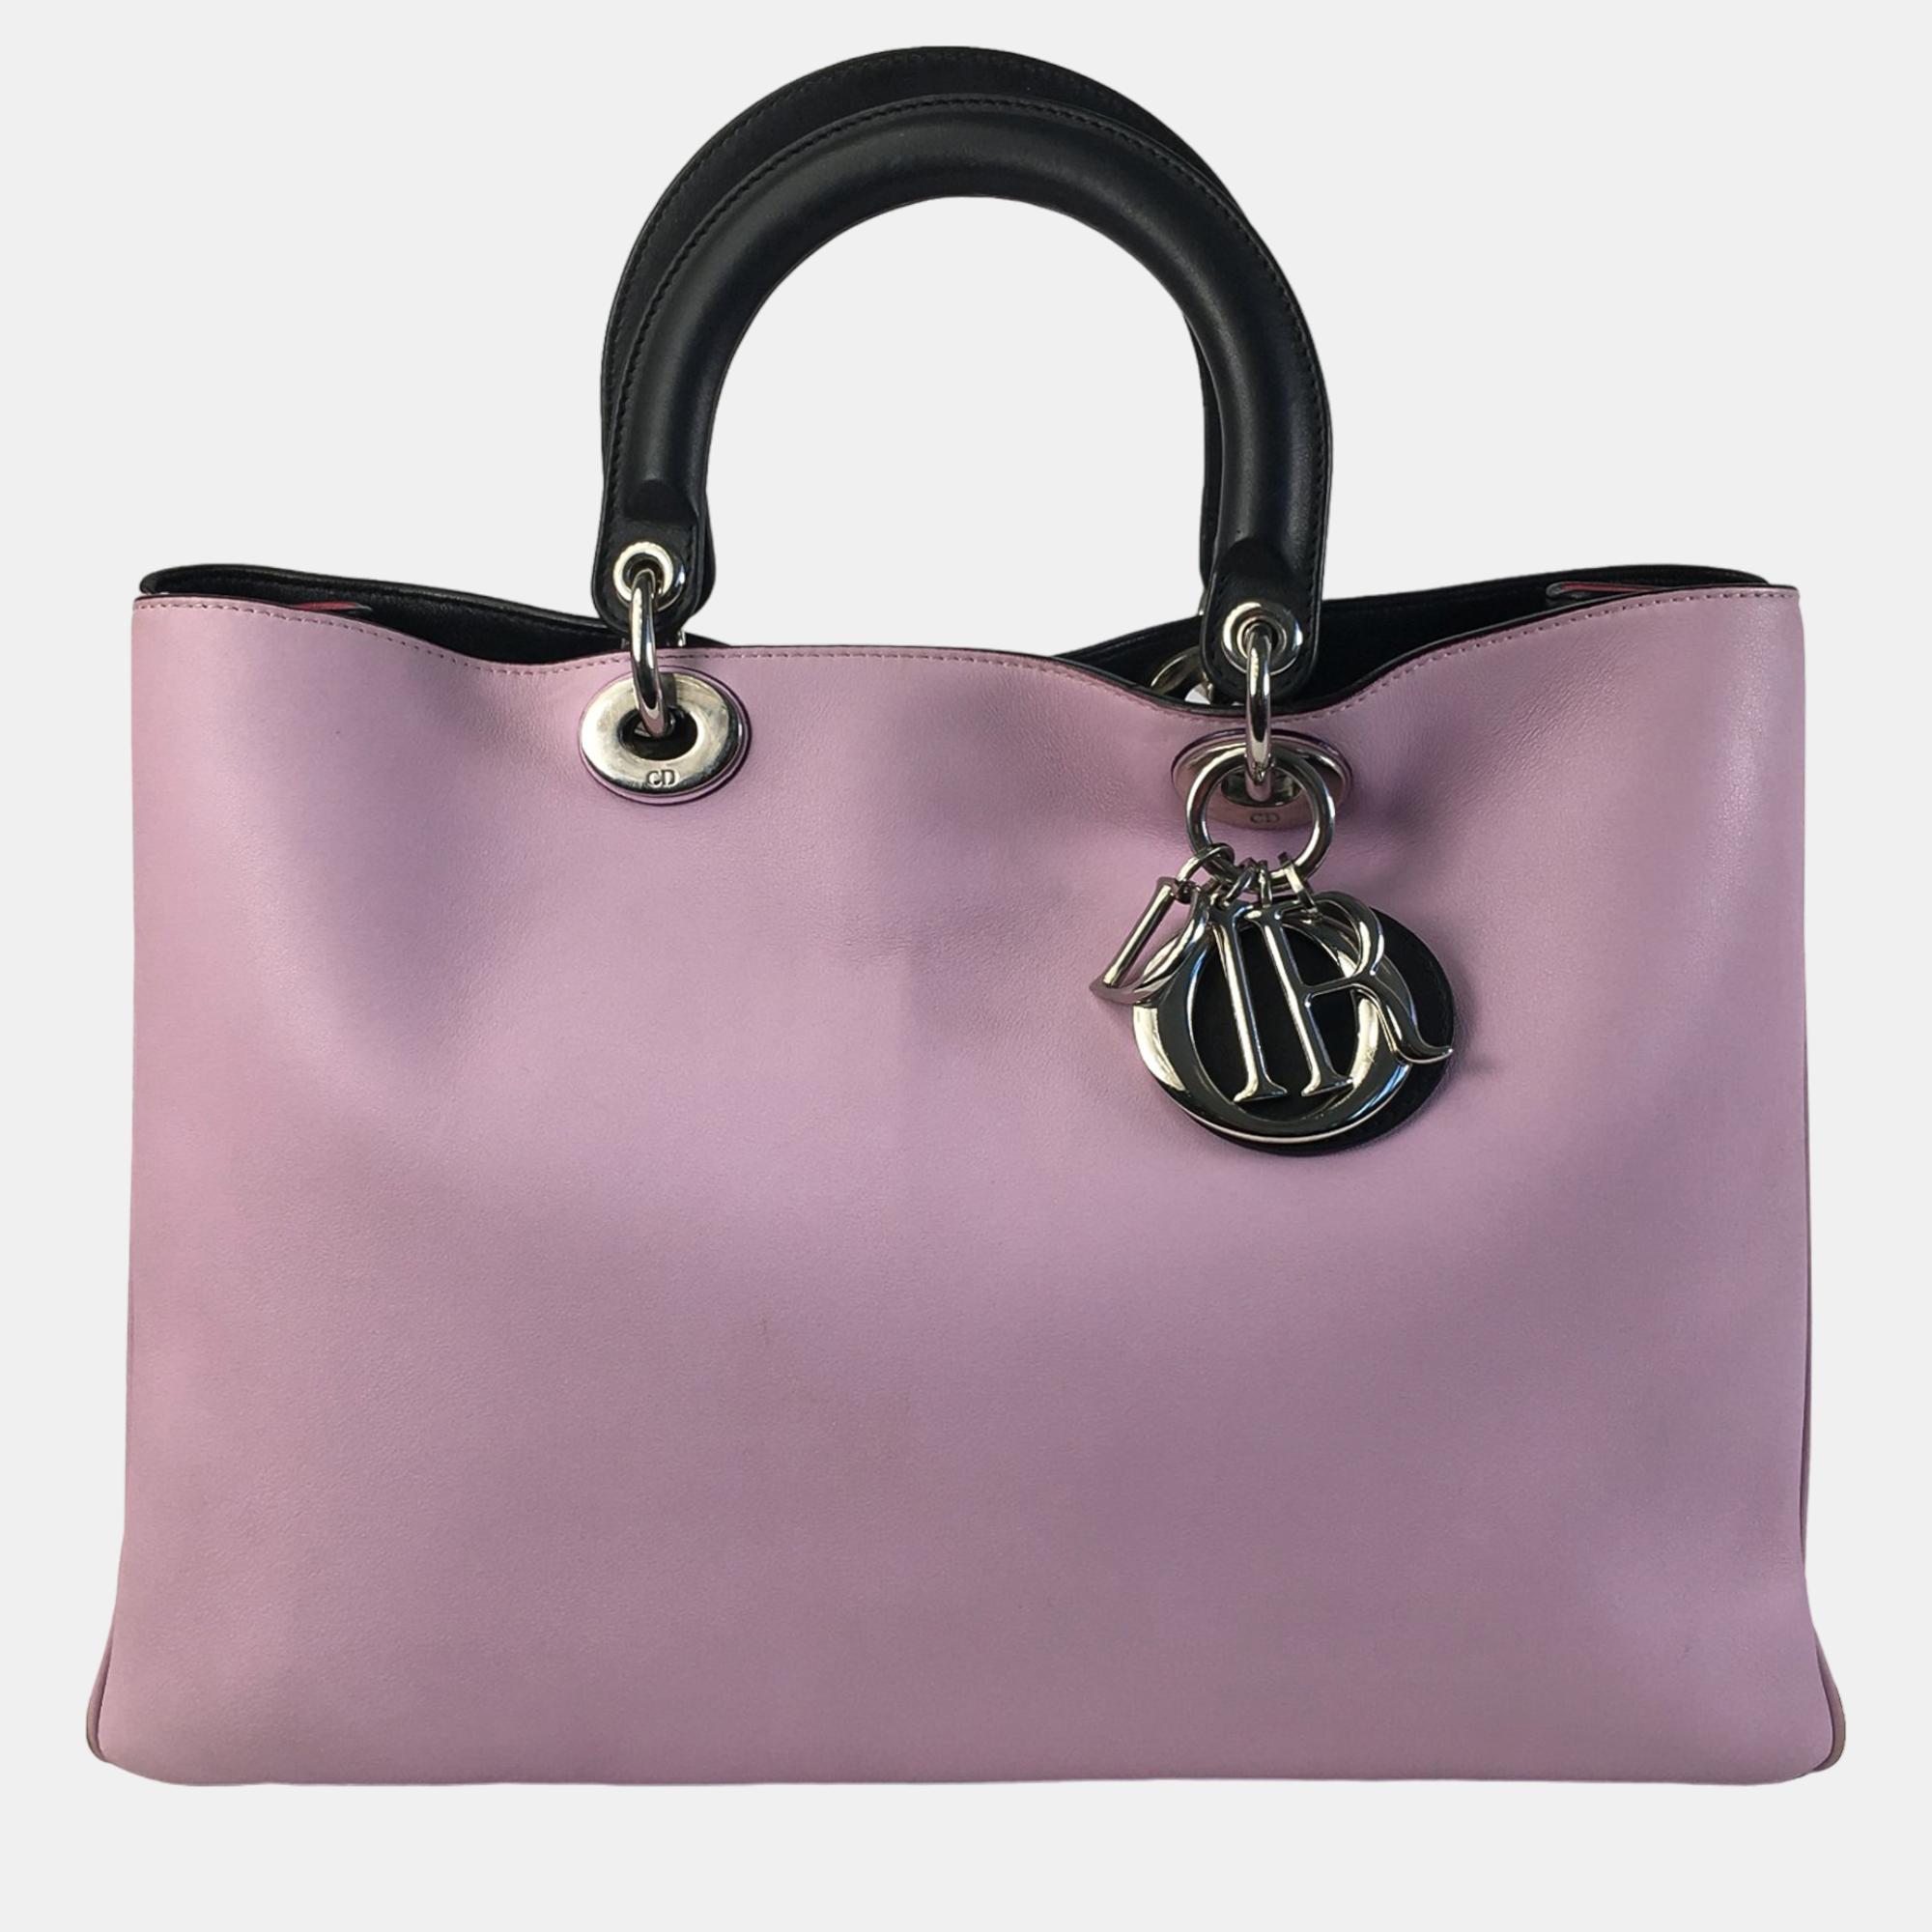 Dior purple large diorissimo satchel